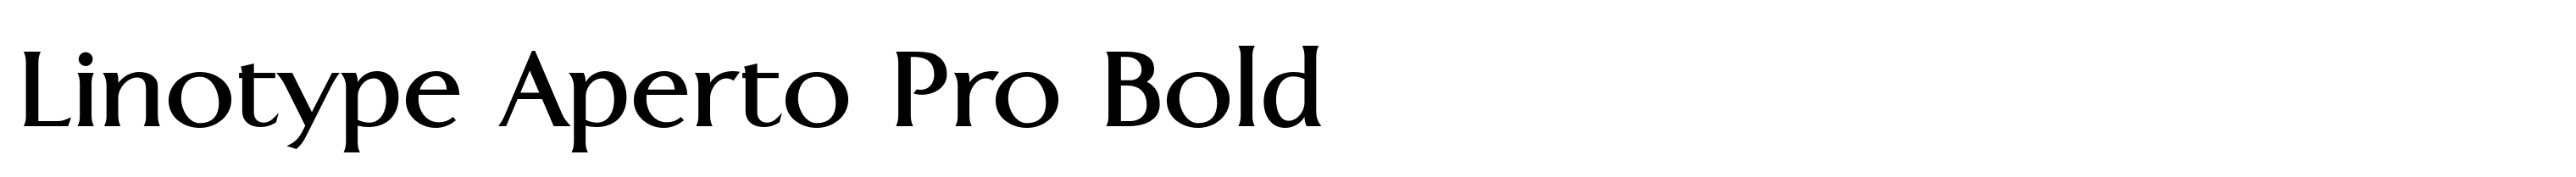 Linotype Aperto Pro Bold